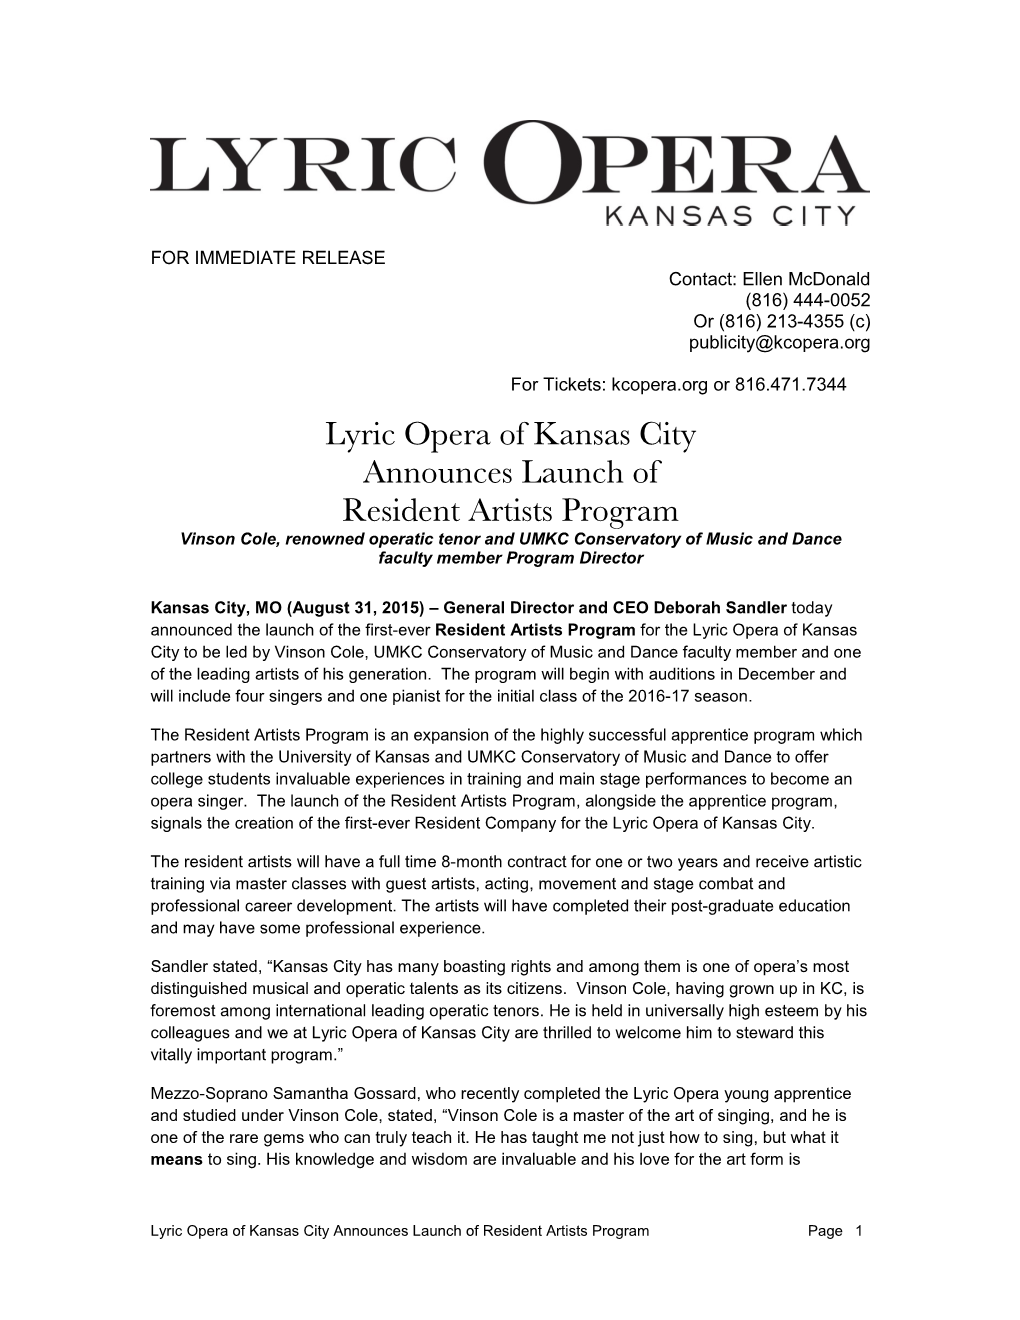 Lyric Opera of Kansas City Announces Launch of Resident Artists Program